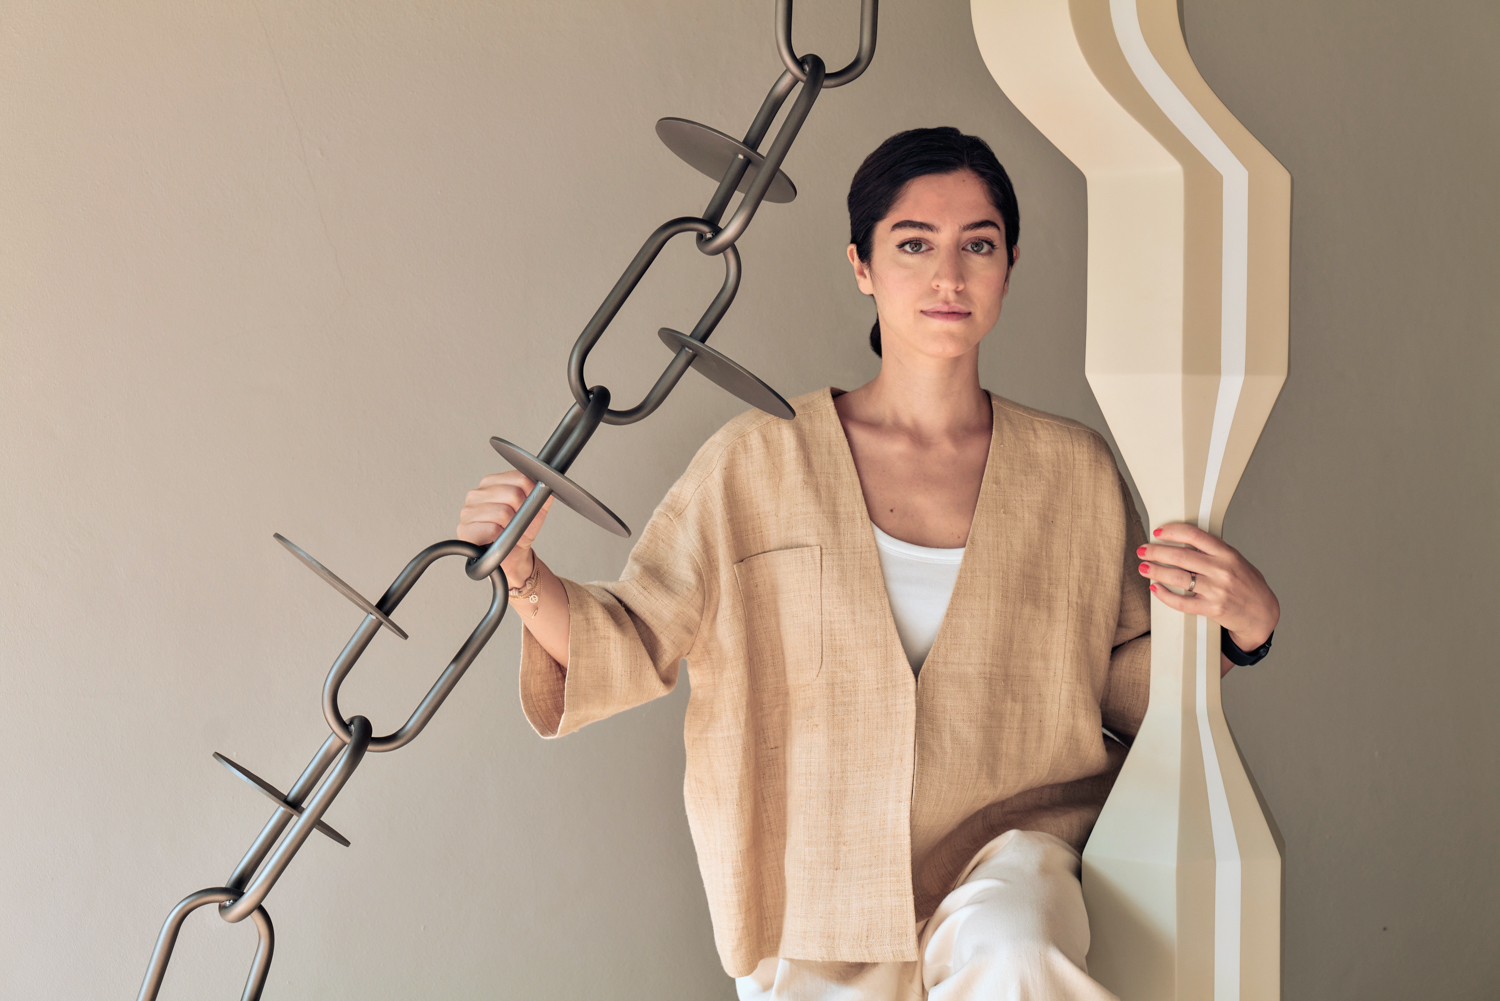 Iranian-born architect and furniture designer Saba Yazdjerdi